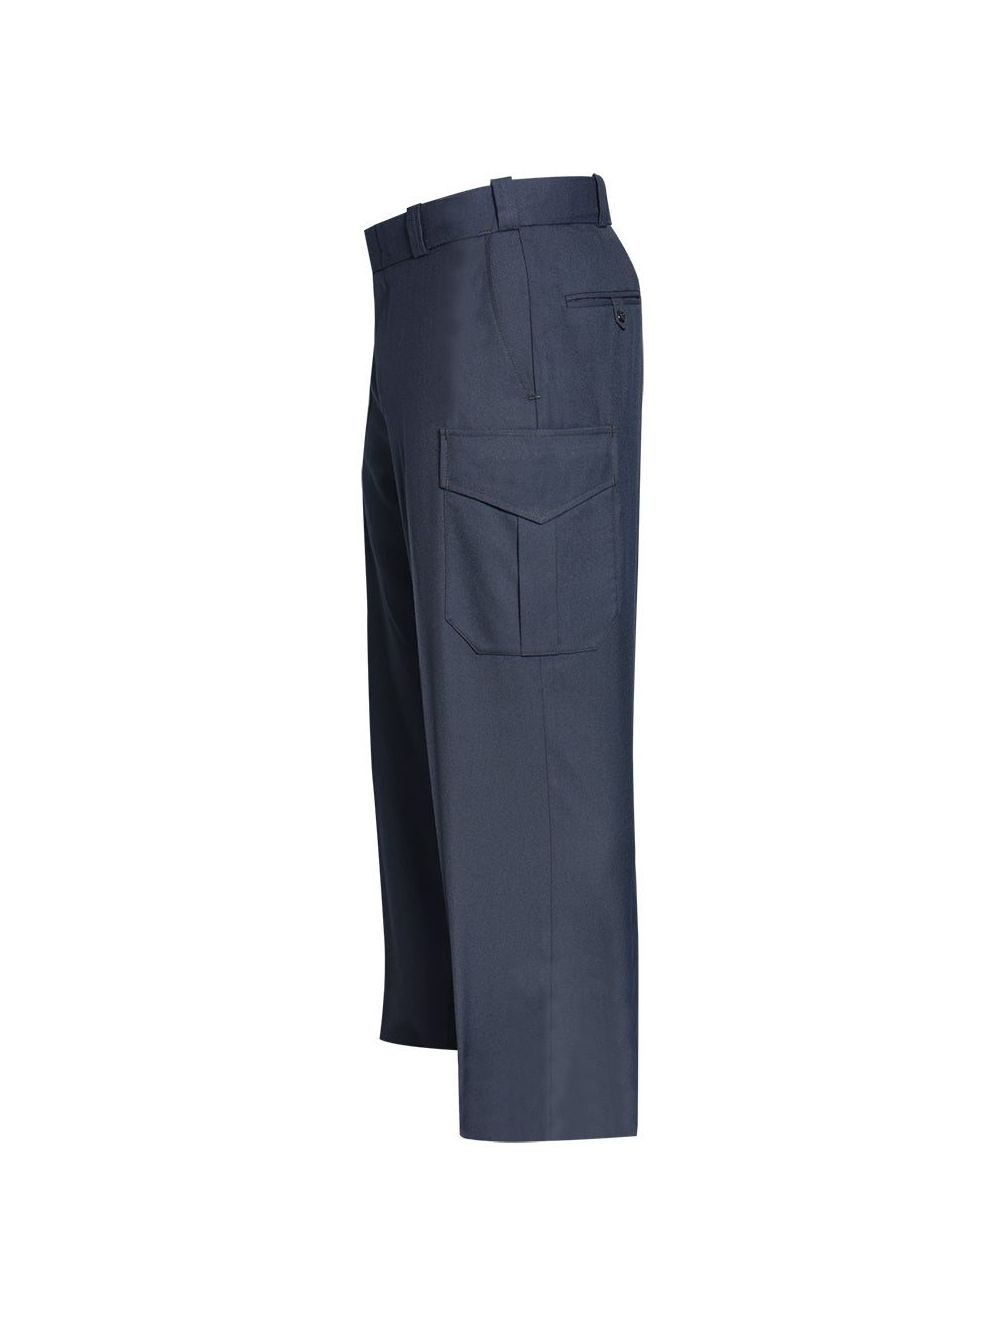 Command Women's Pants w/ Cargo Pockets - LAPD Navy